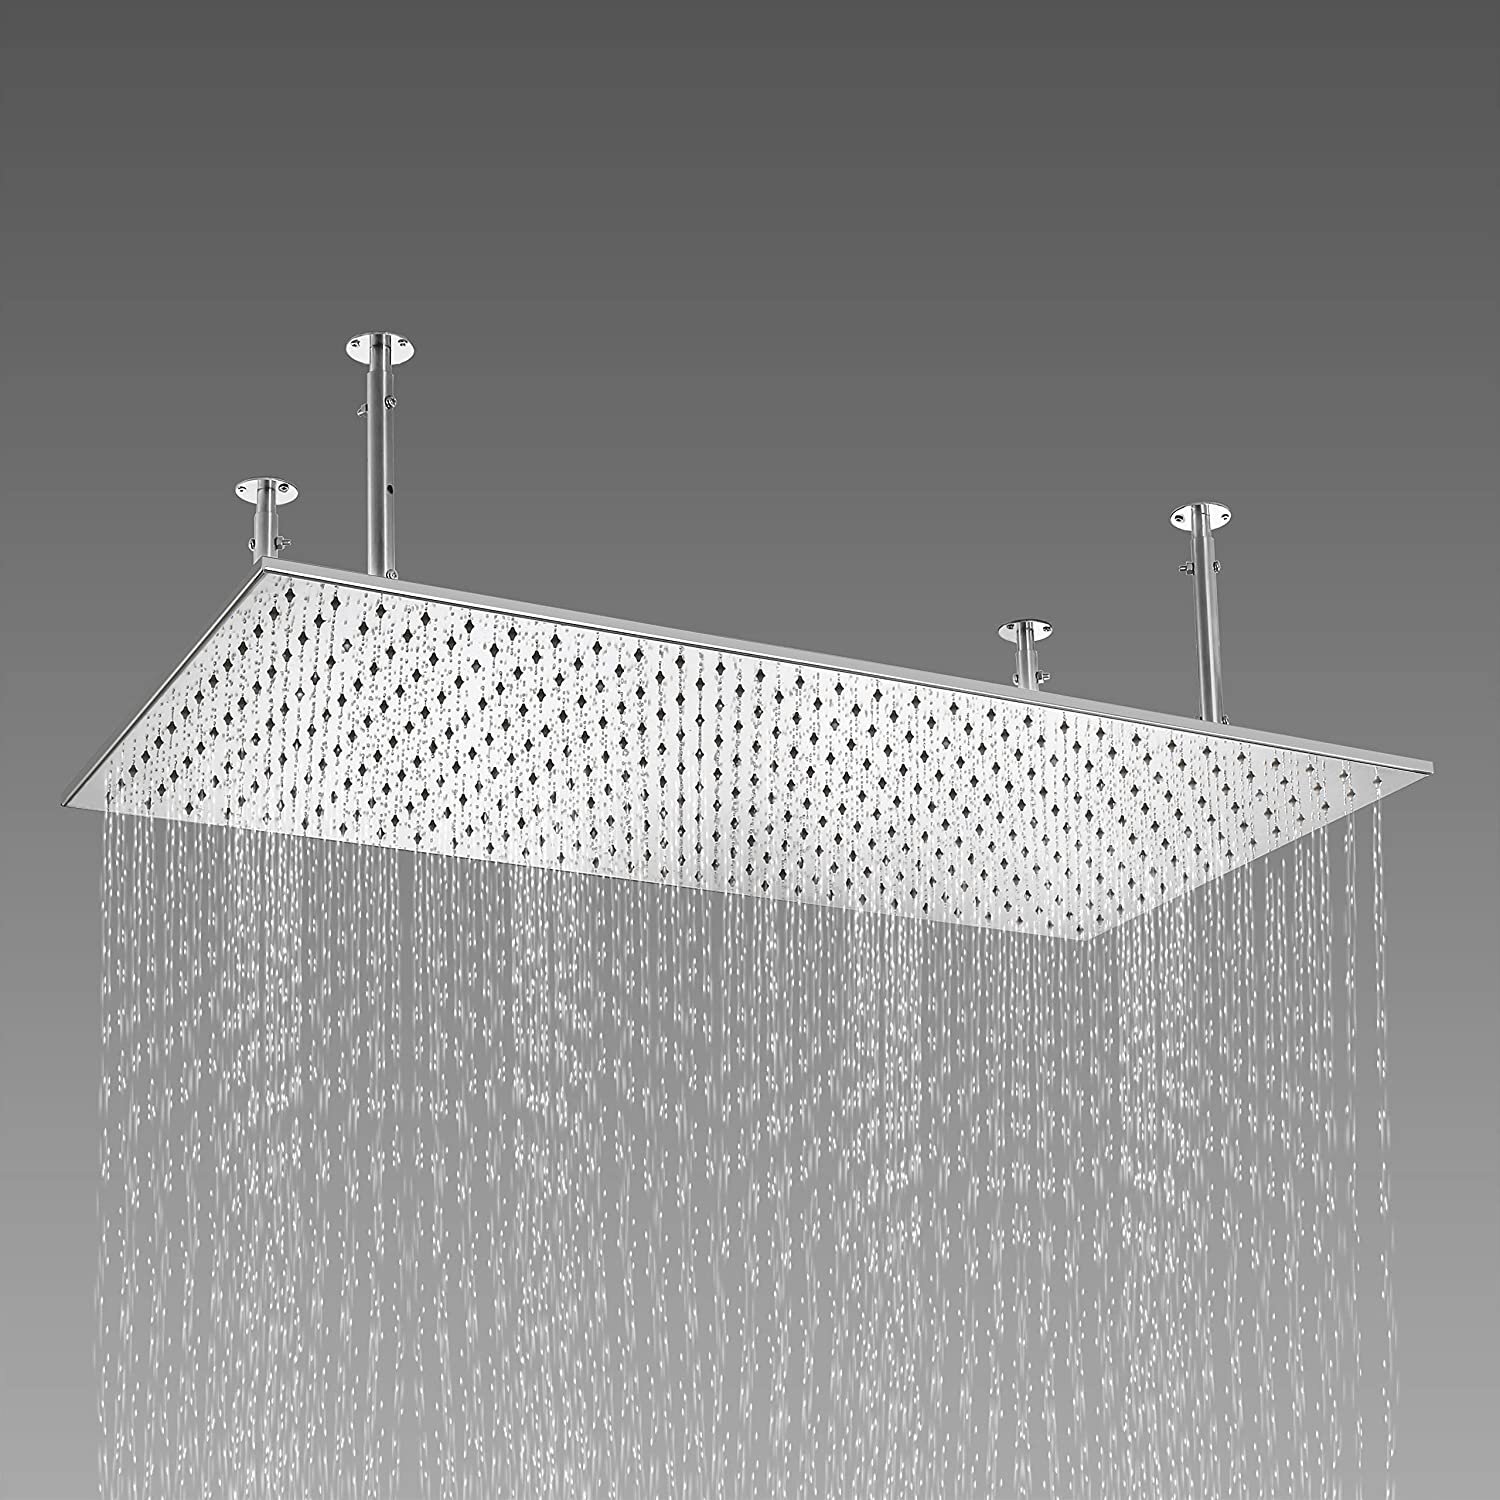 HOMEDEC 20x40 inch LED Showerhead Stainless Steel Rectangle Rainfall Shower Head Ceiling Mount for Bathroom, Chrome - 1